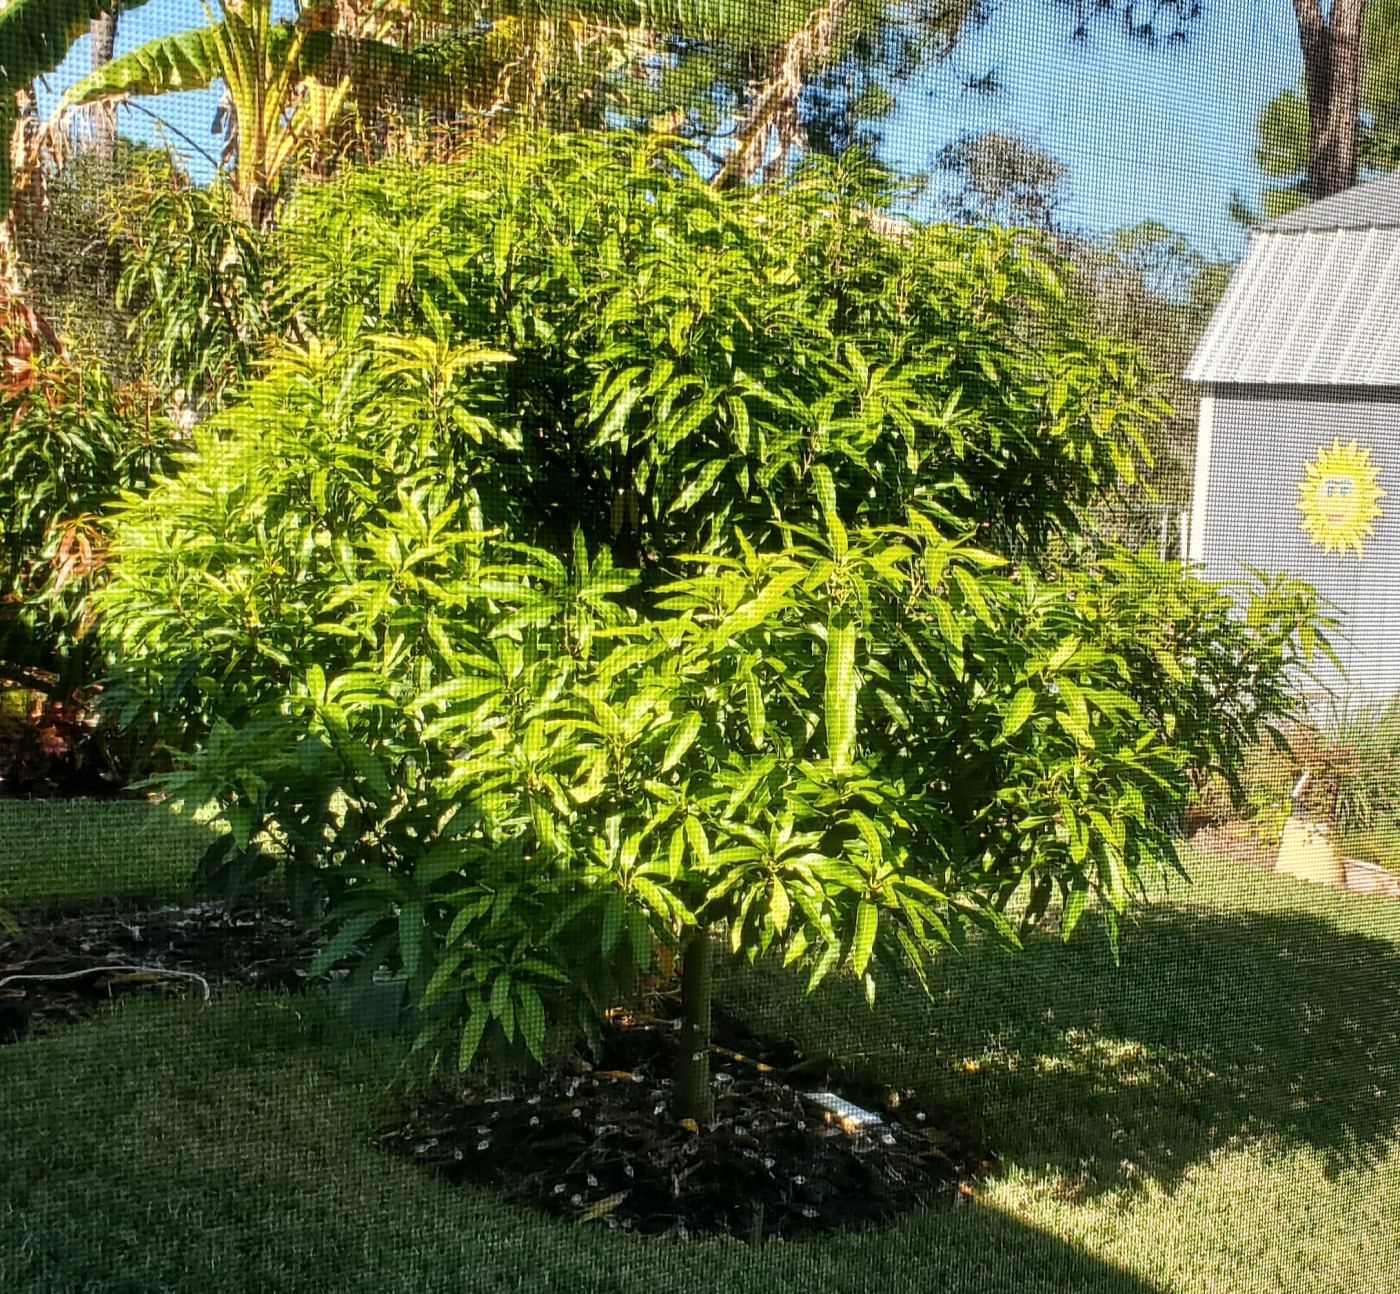 Mango Tree